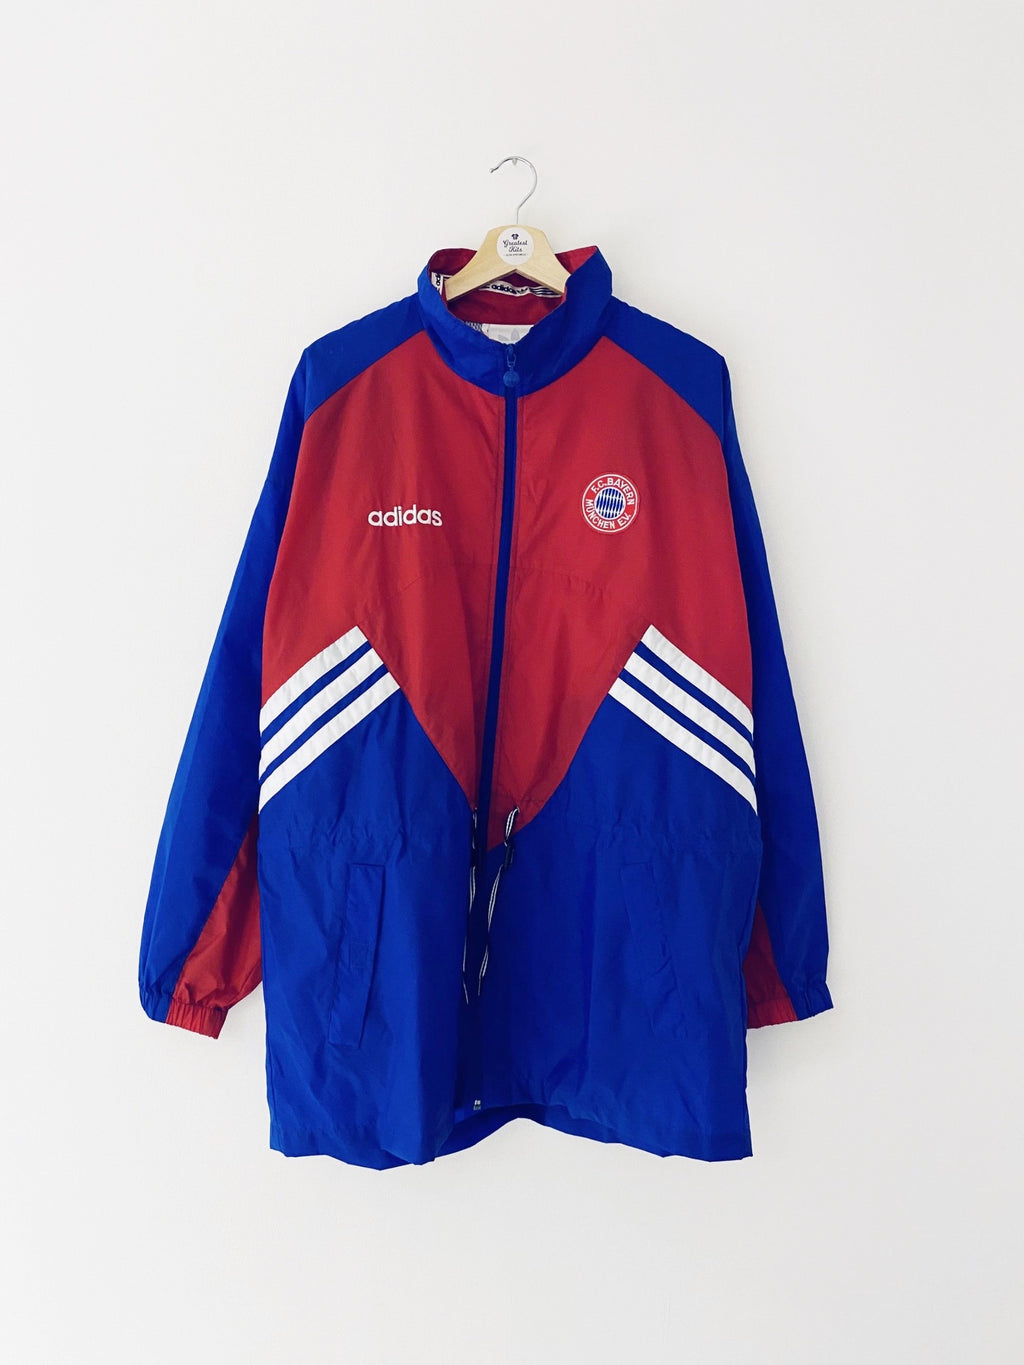 1990-92 Arsenal adidas Jacket - Excellent 9/10 - (M)